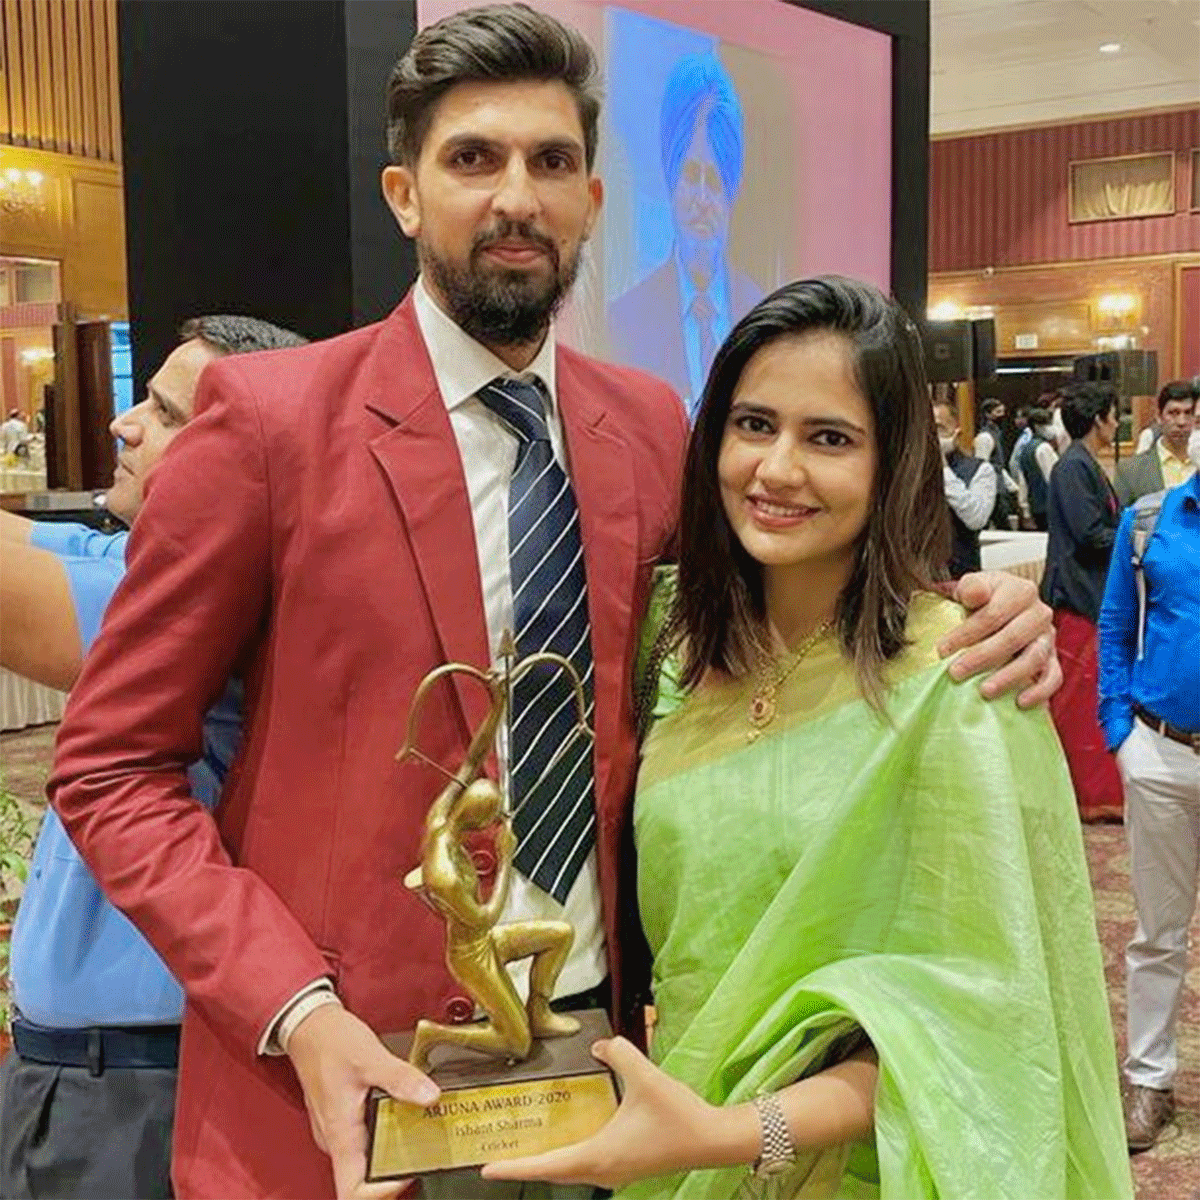 Ishant Sharma and his wife Pratima Singh with the Arjuna Award